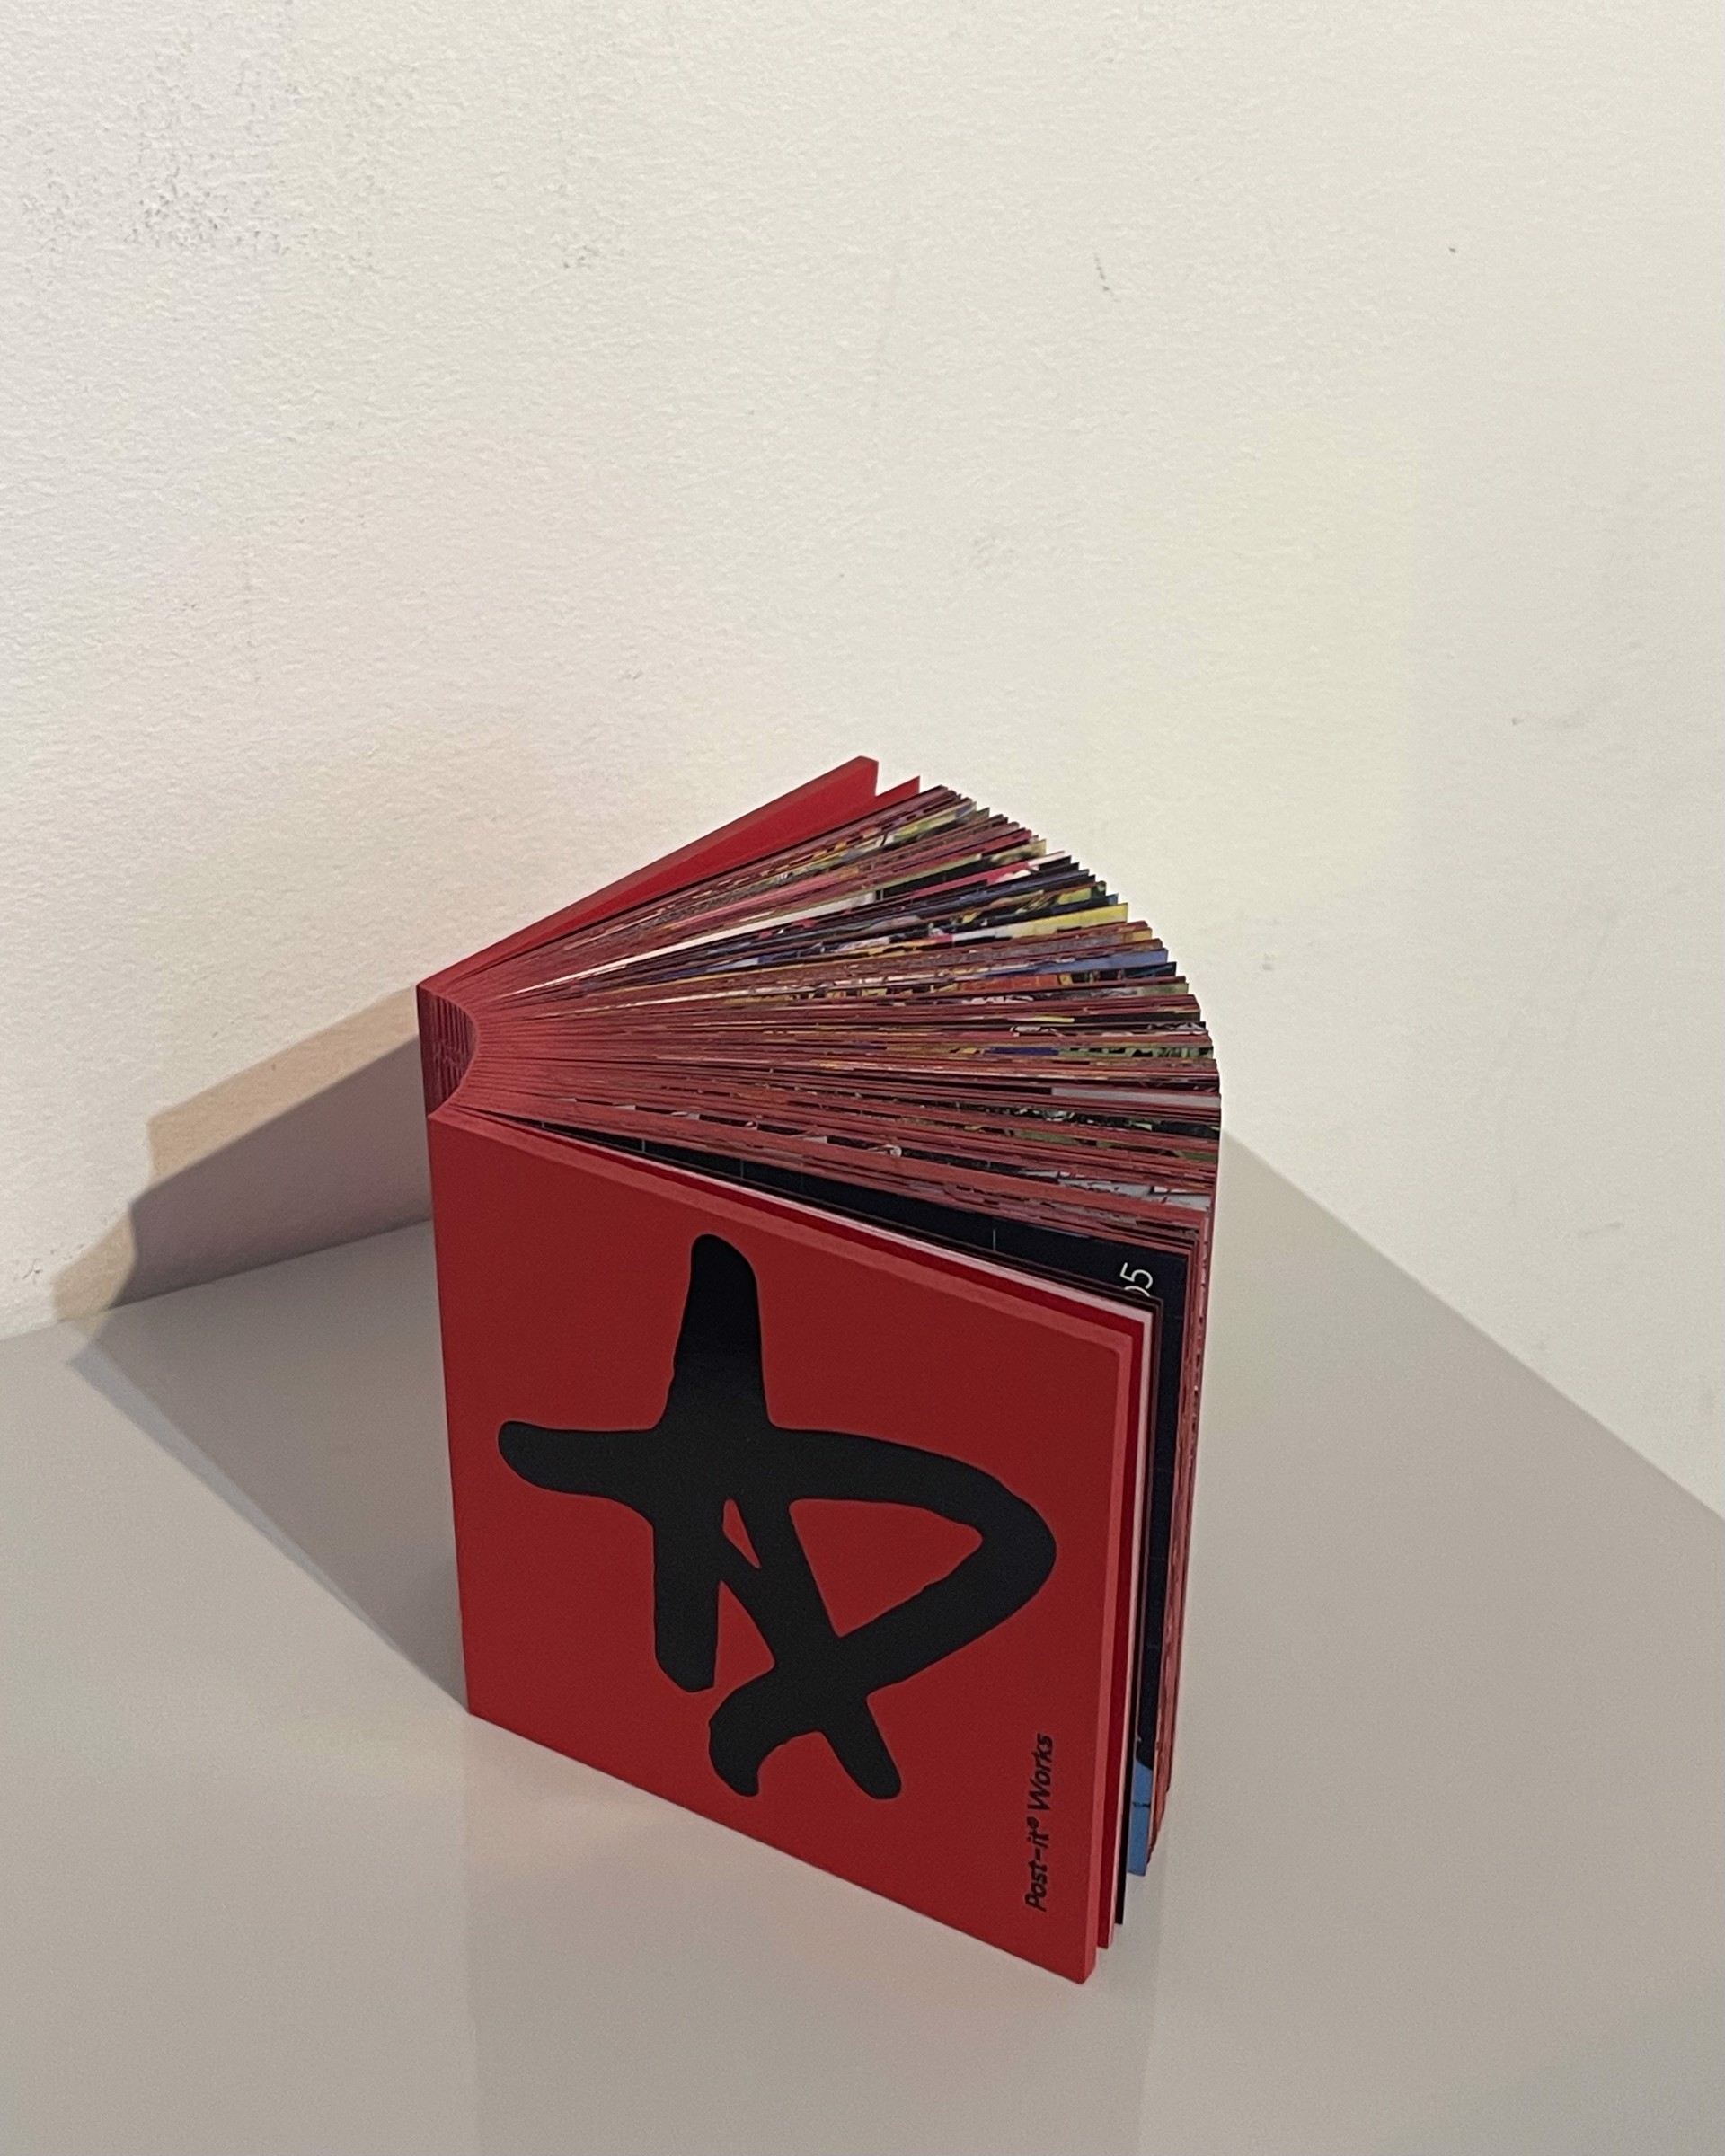 Post-it Works by Ardan Özmenoğlu